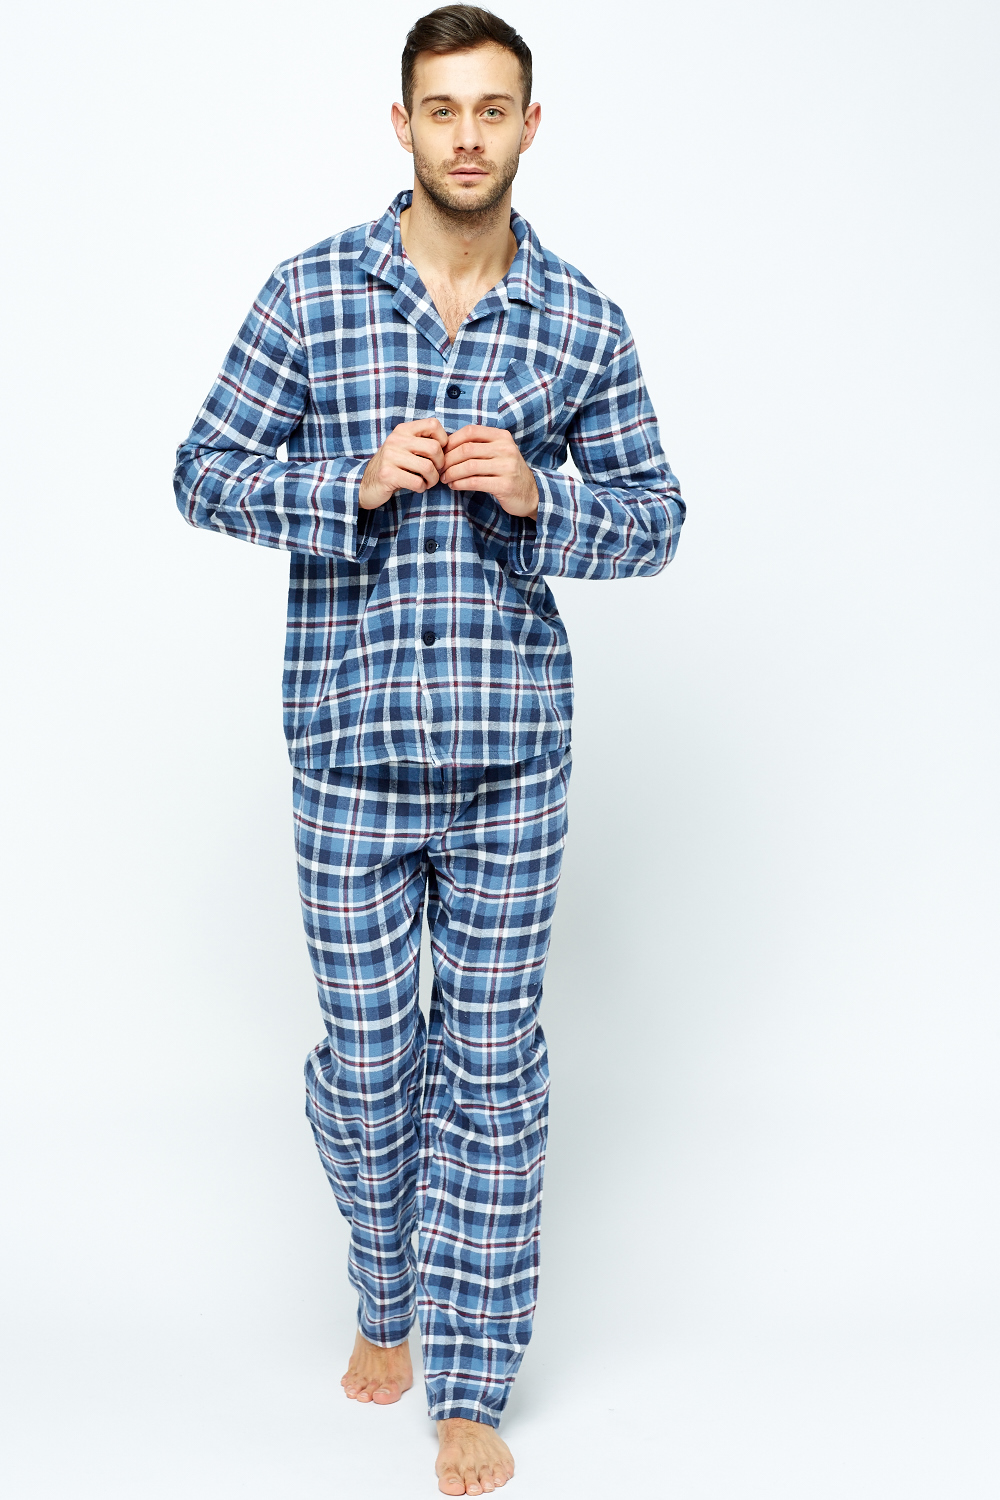 Check Grid Pyjamas Set - Just $7